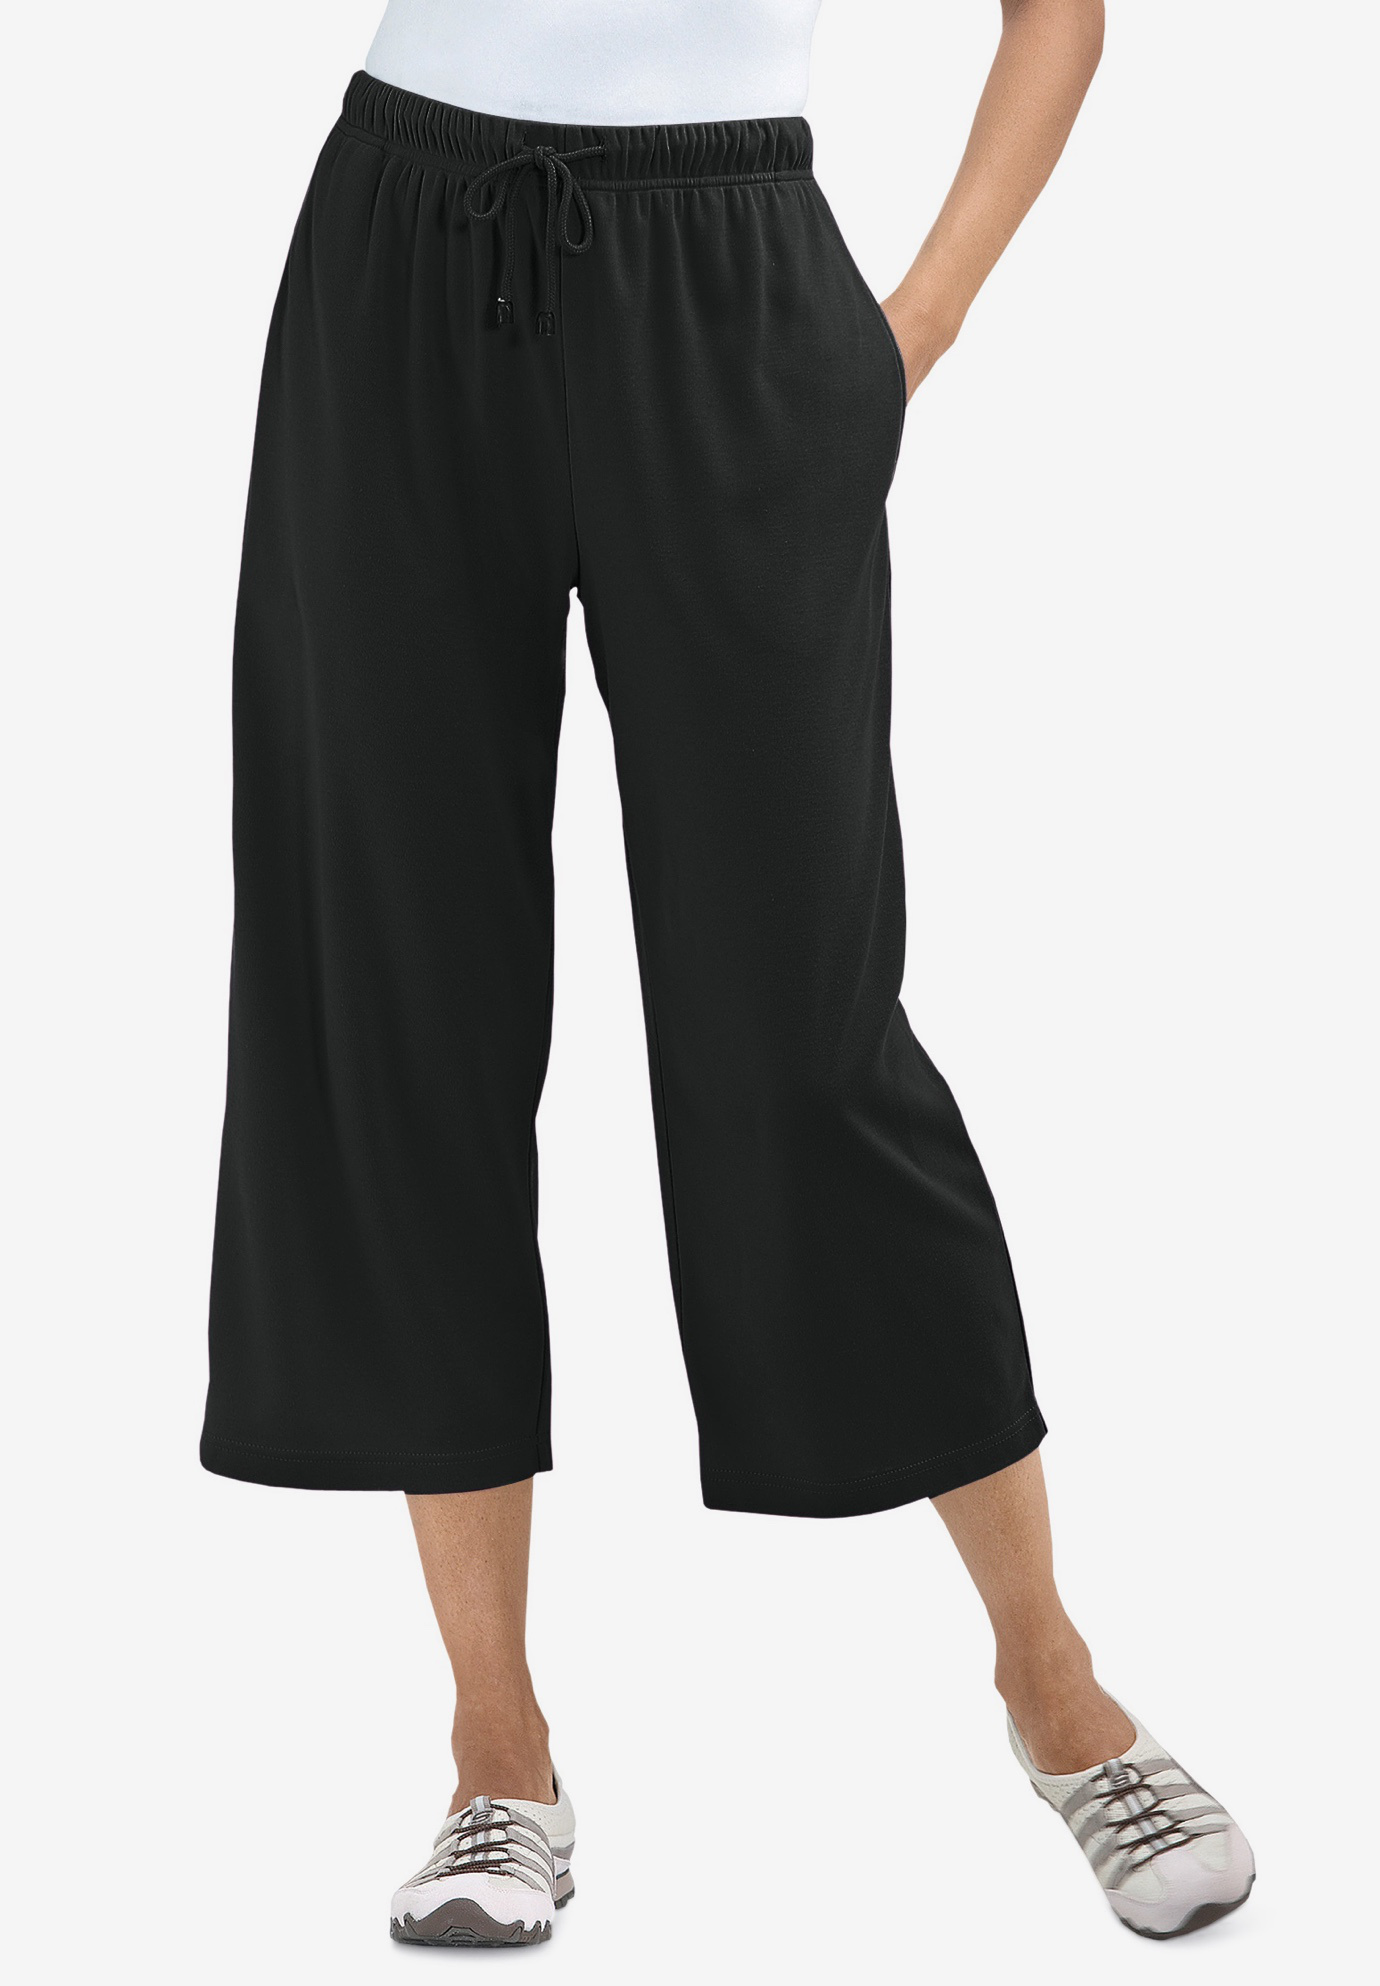 Sport Knit Capri Pant | Plus Size Shorts & Capris | Woman Within